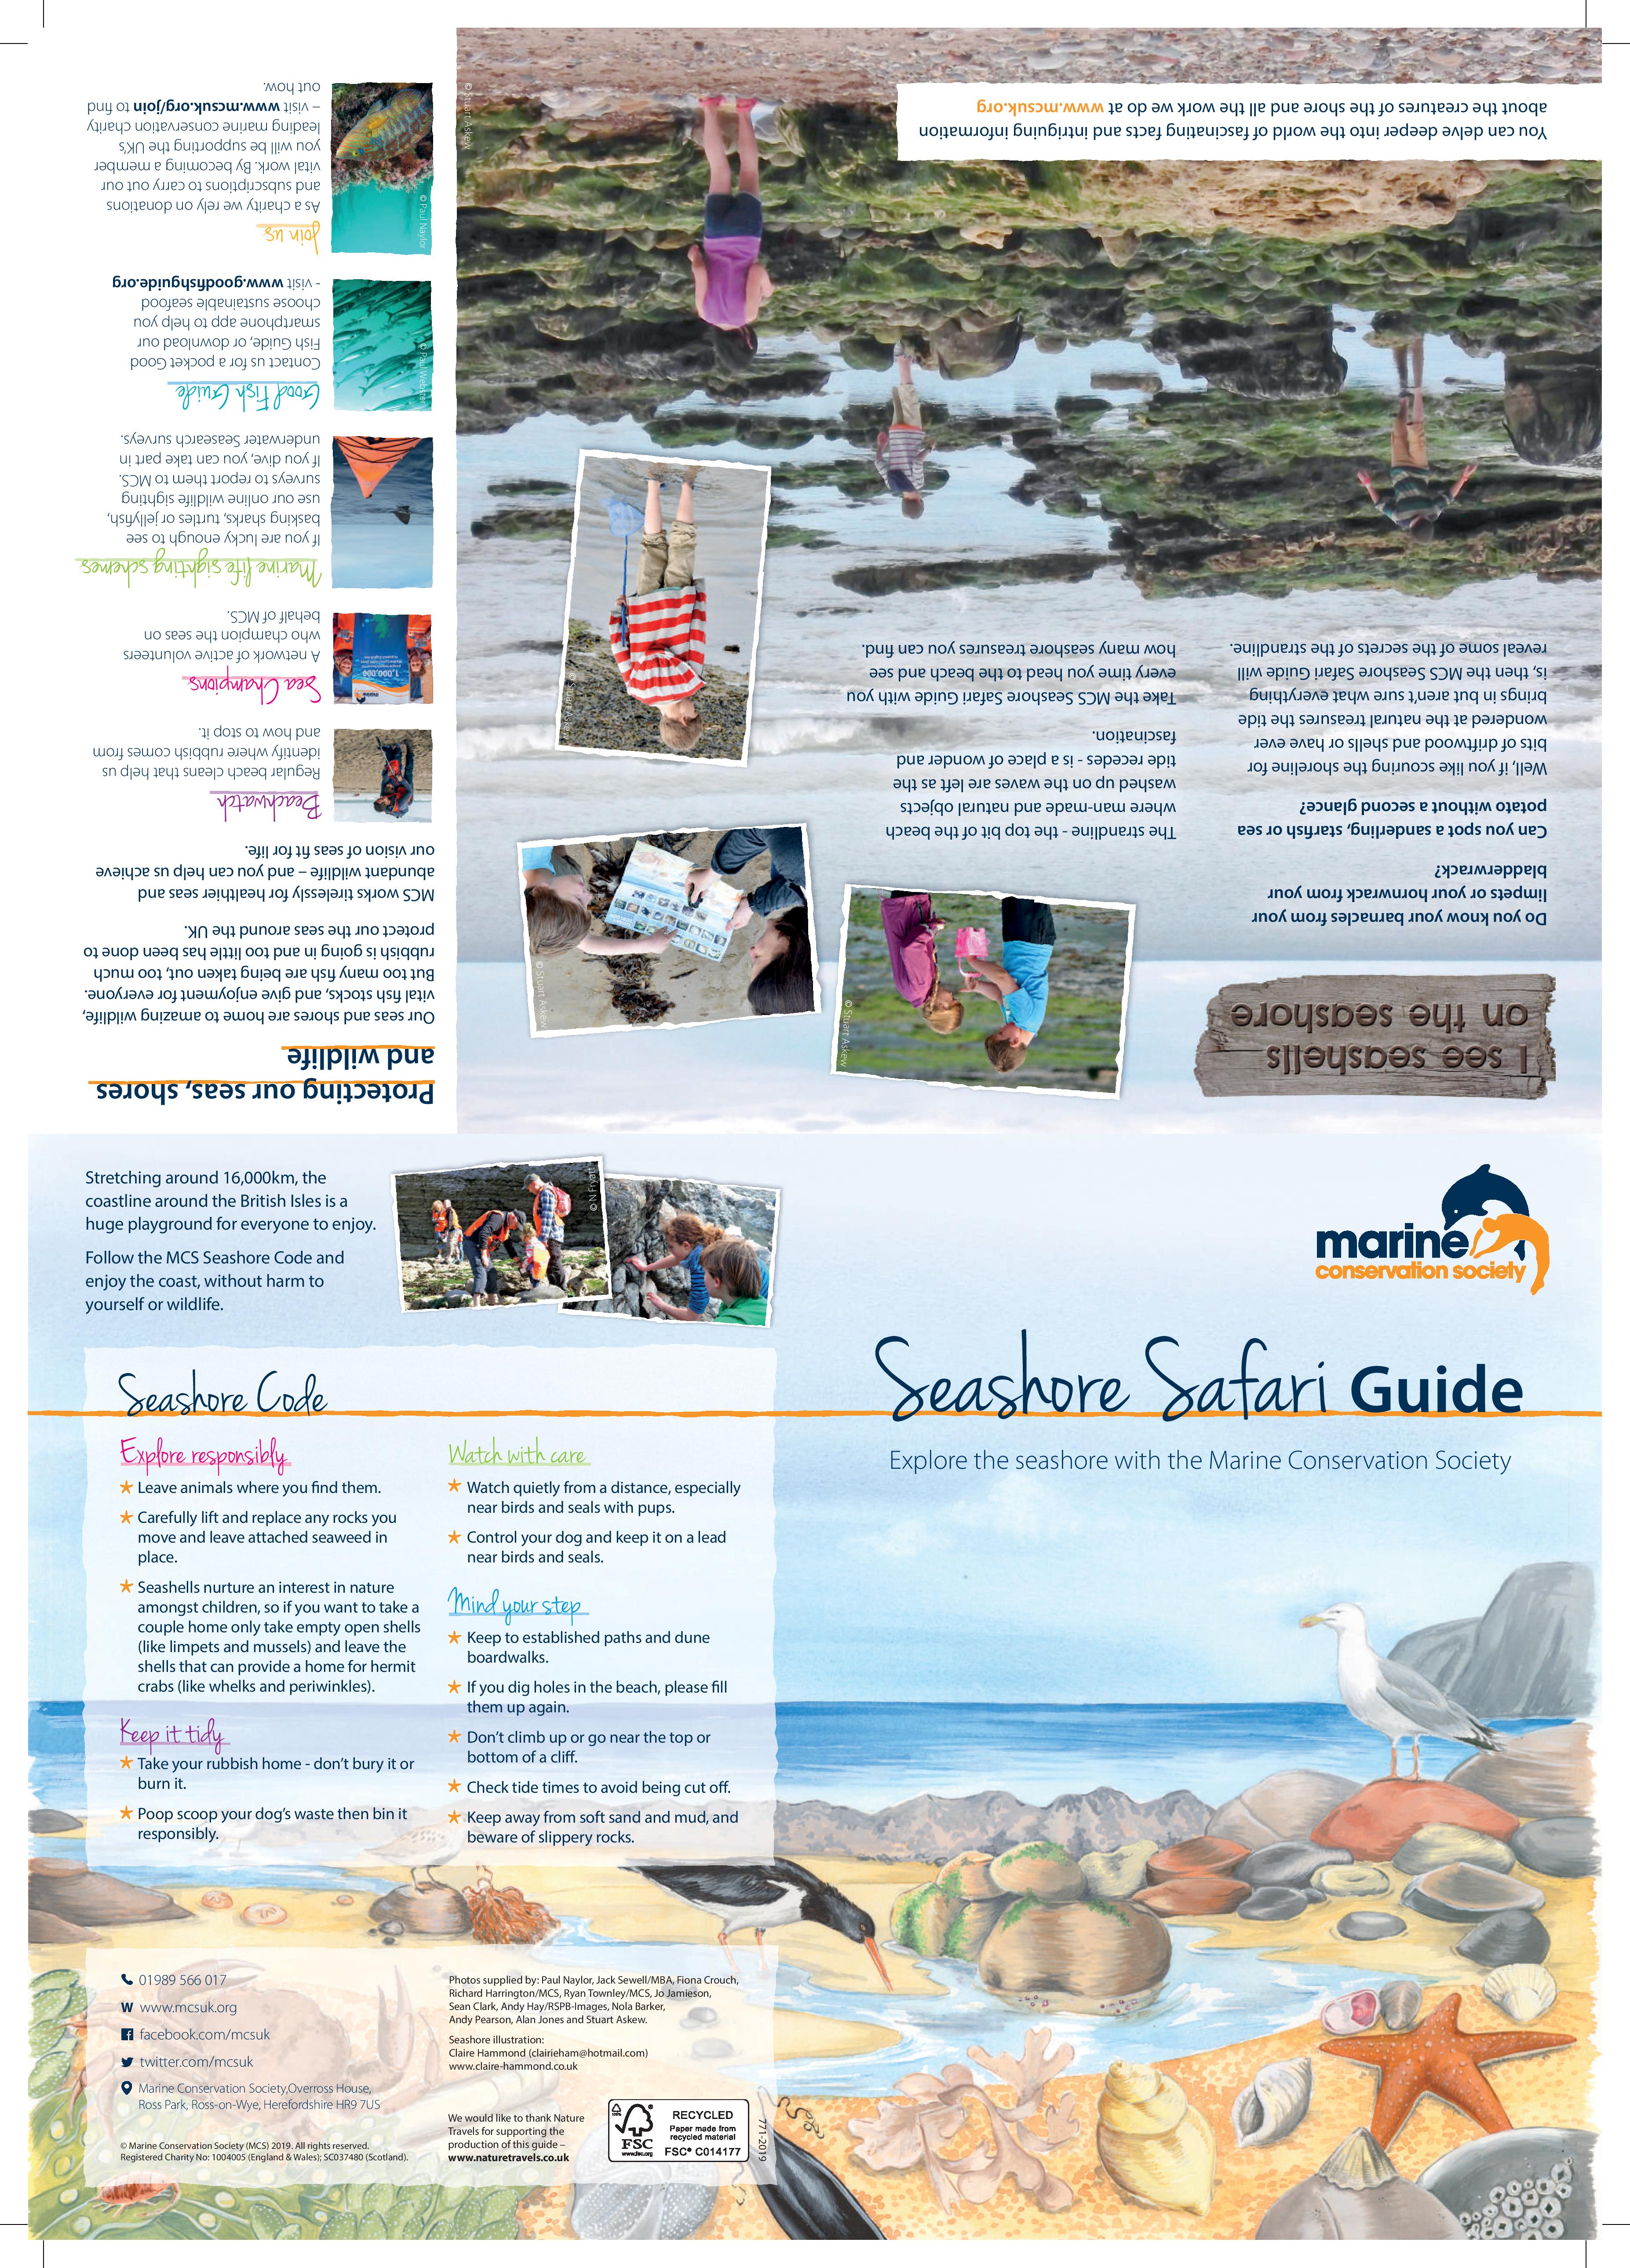 MCS Seashore Safari Guide part 1